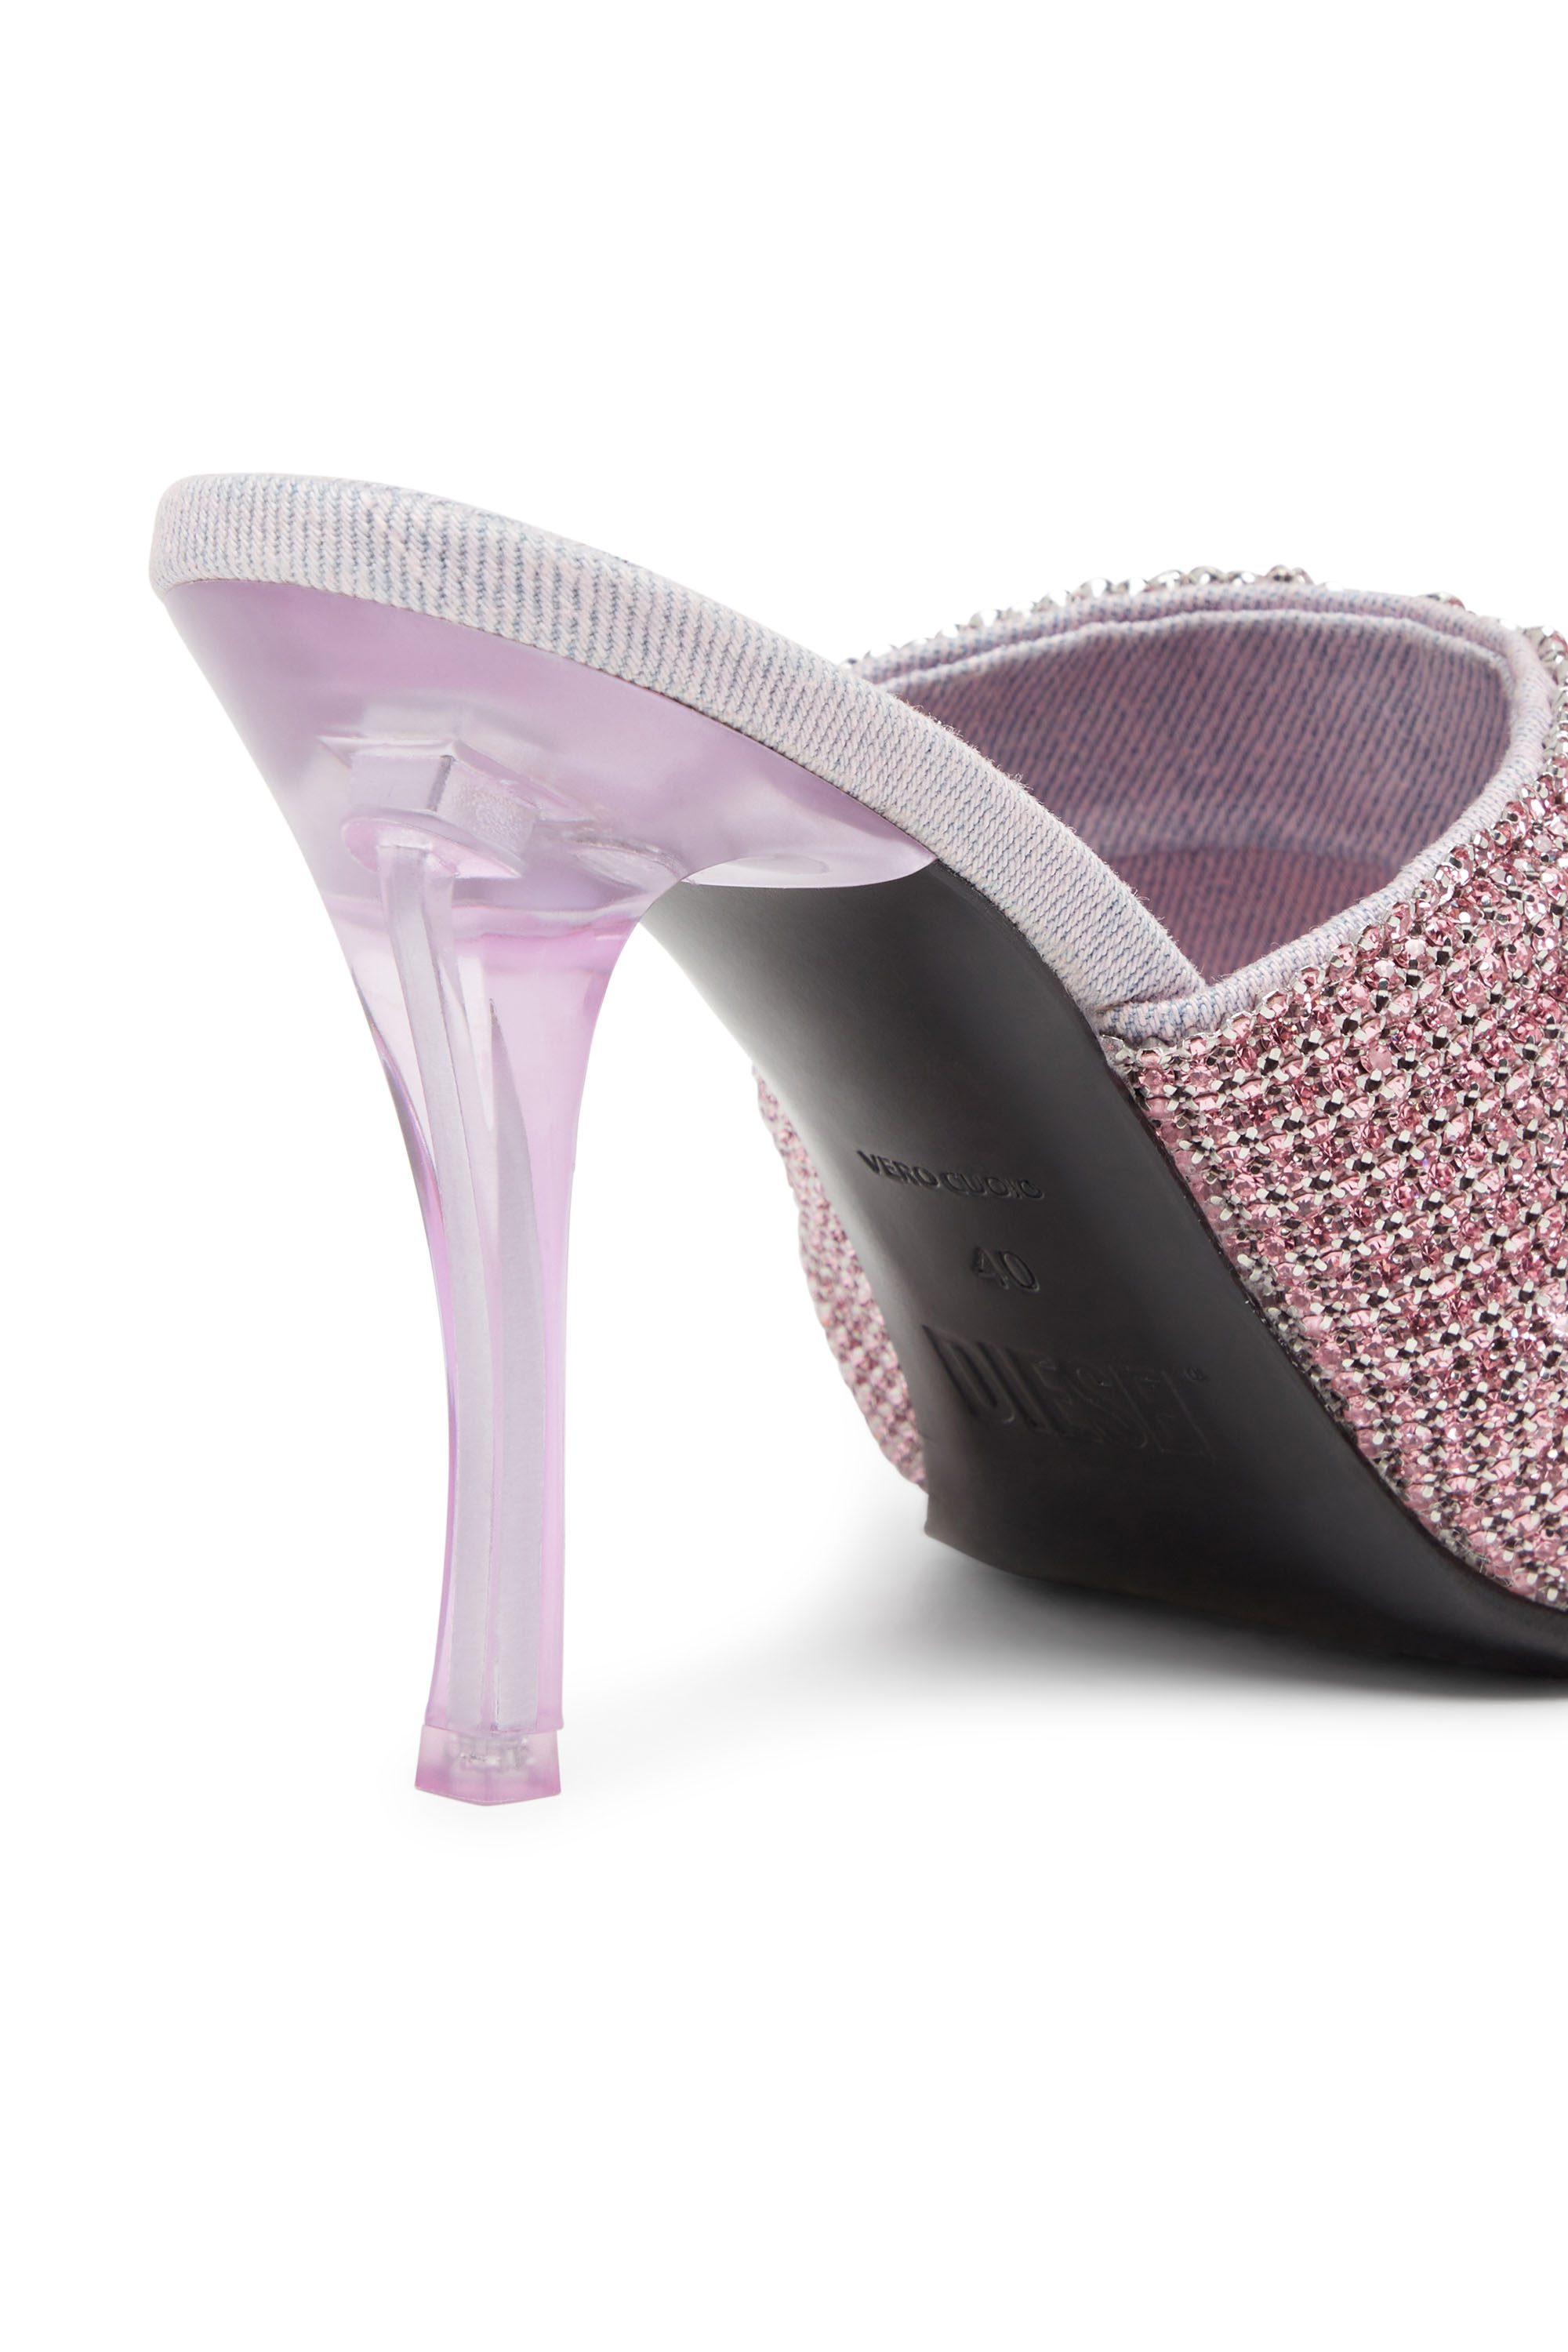 Diesel - D-SYDNEY SDL S, Woman D-Sydney Sdl S Sandals - Mule sandals with rhinestone band in Pink - Image 4